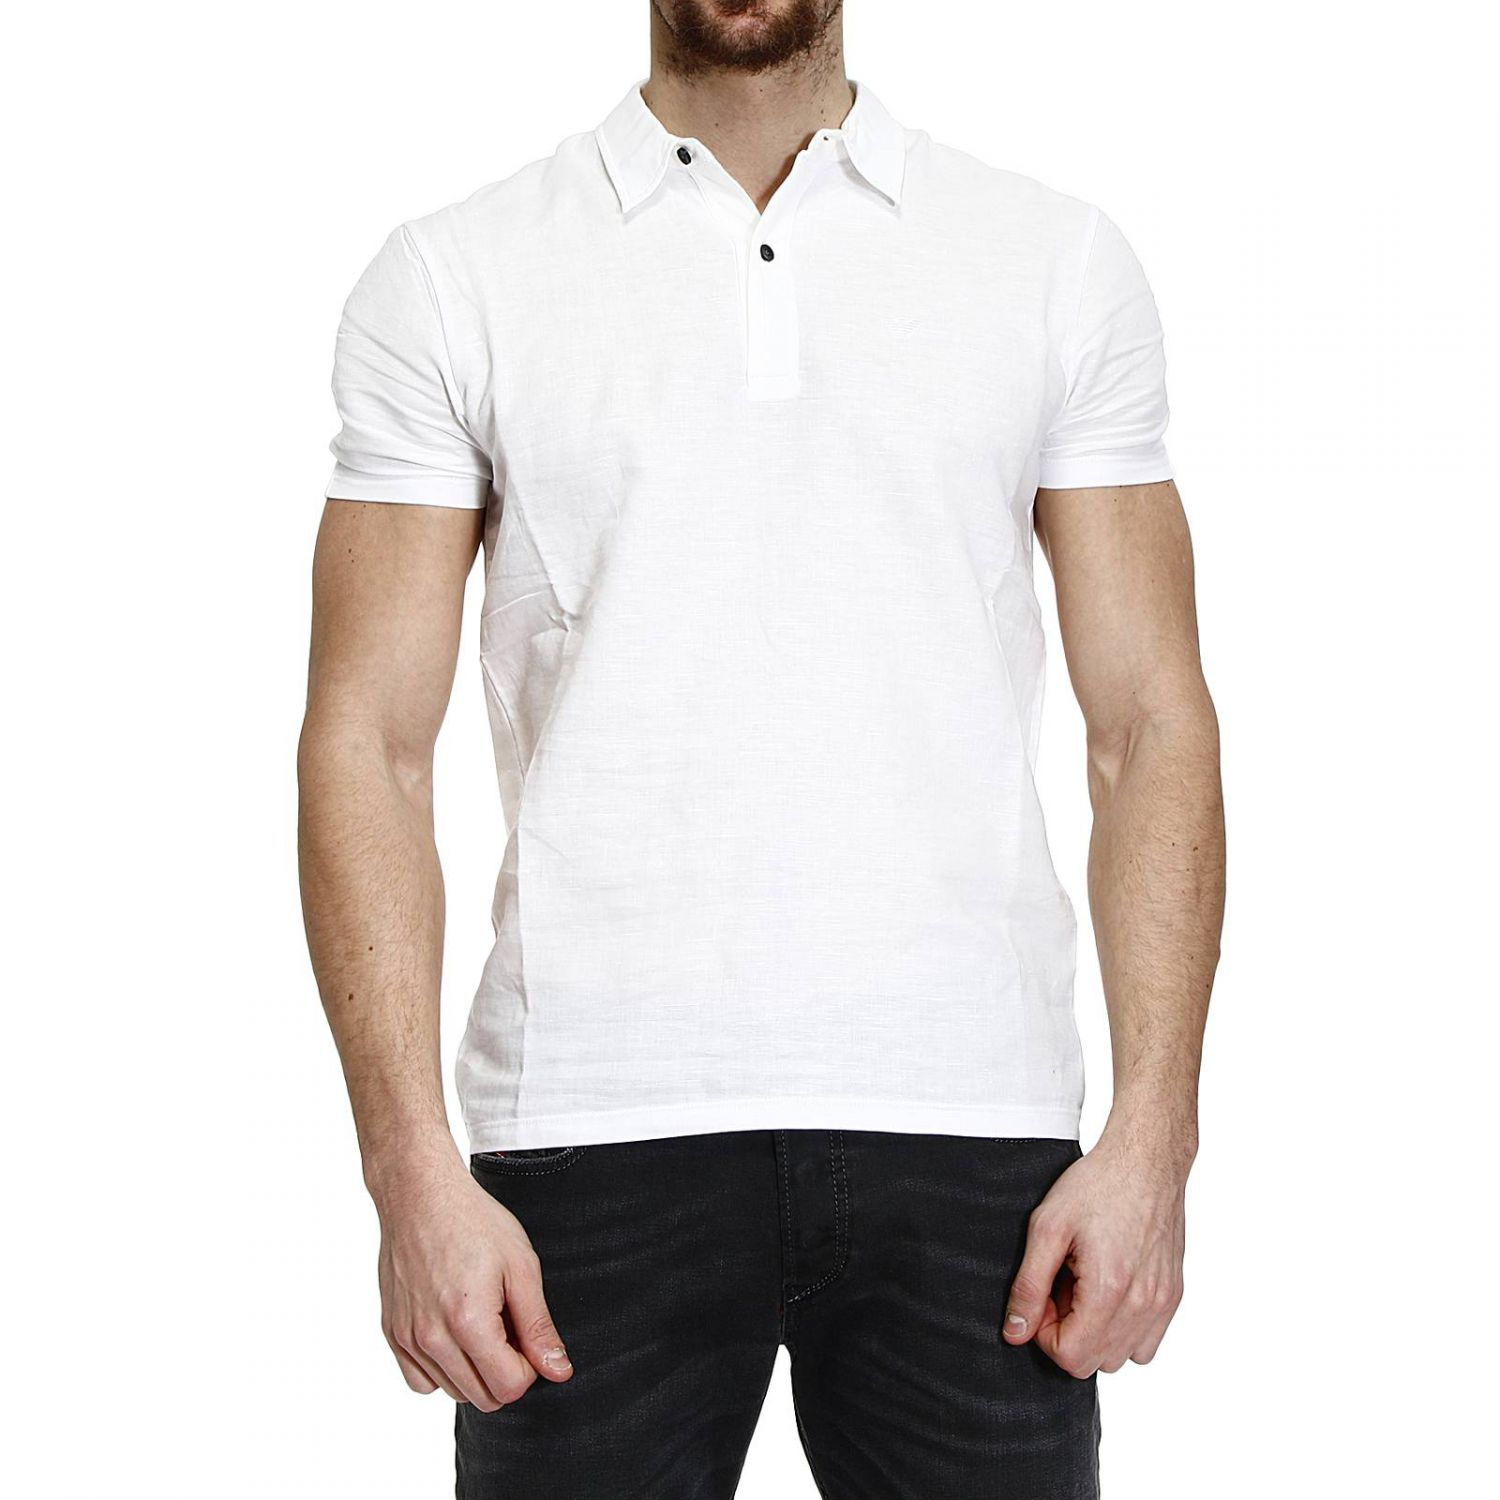 Lyst - Emporio Armani Shirt Polo Linen in White for Men